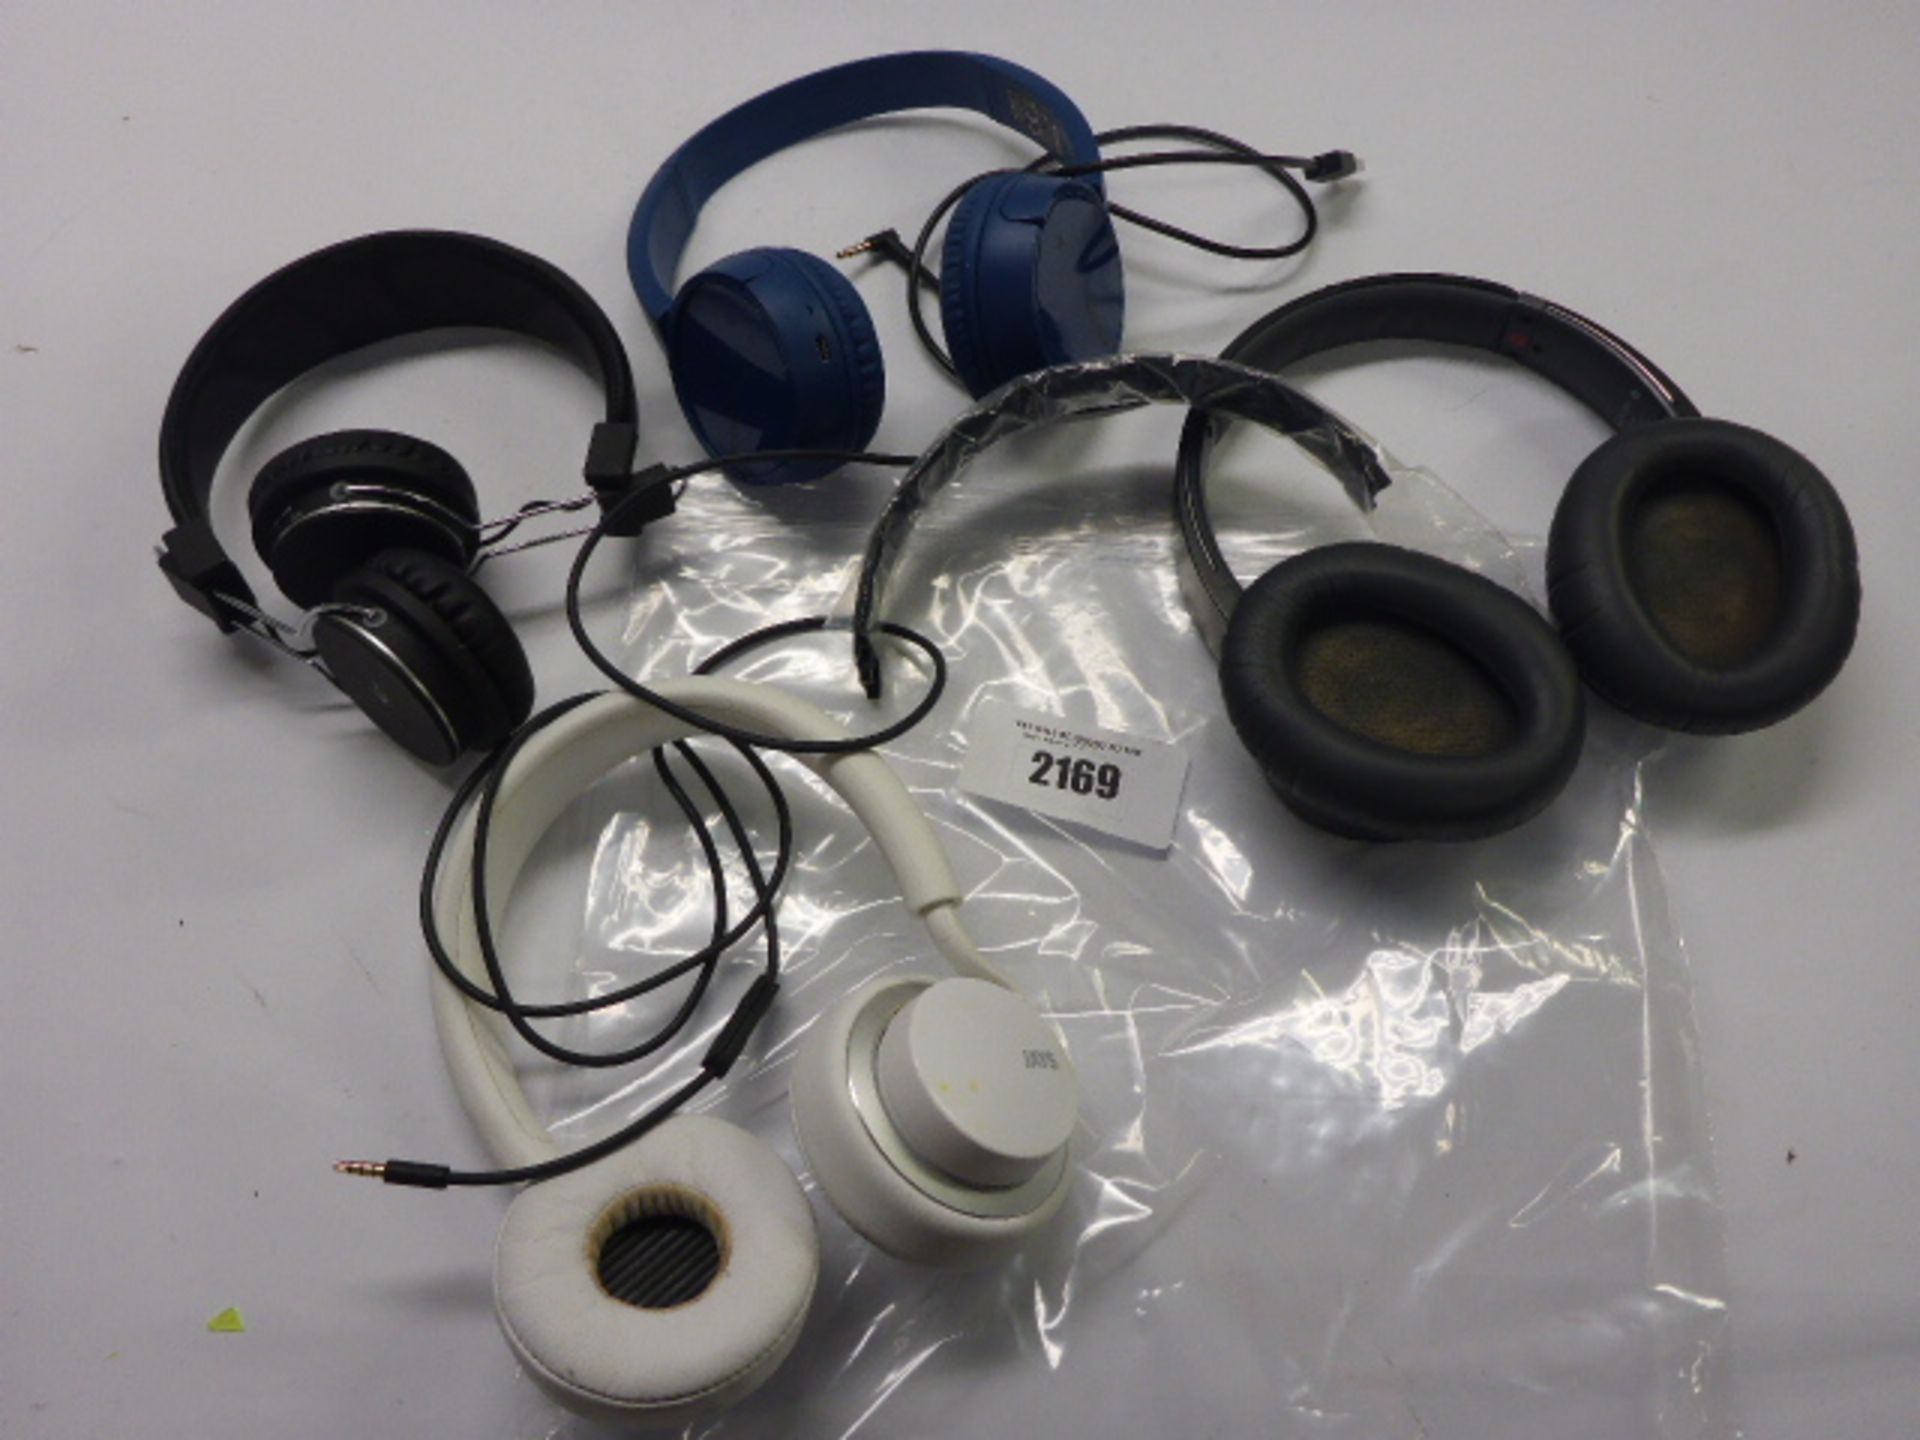 Bag containing quantity of various headphones